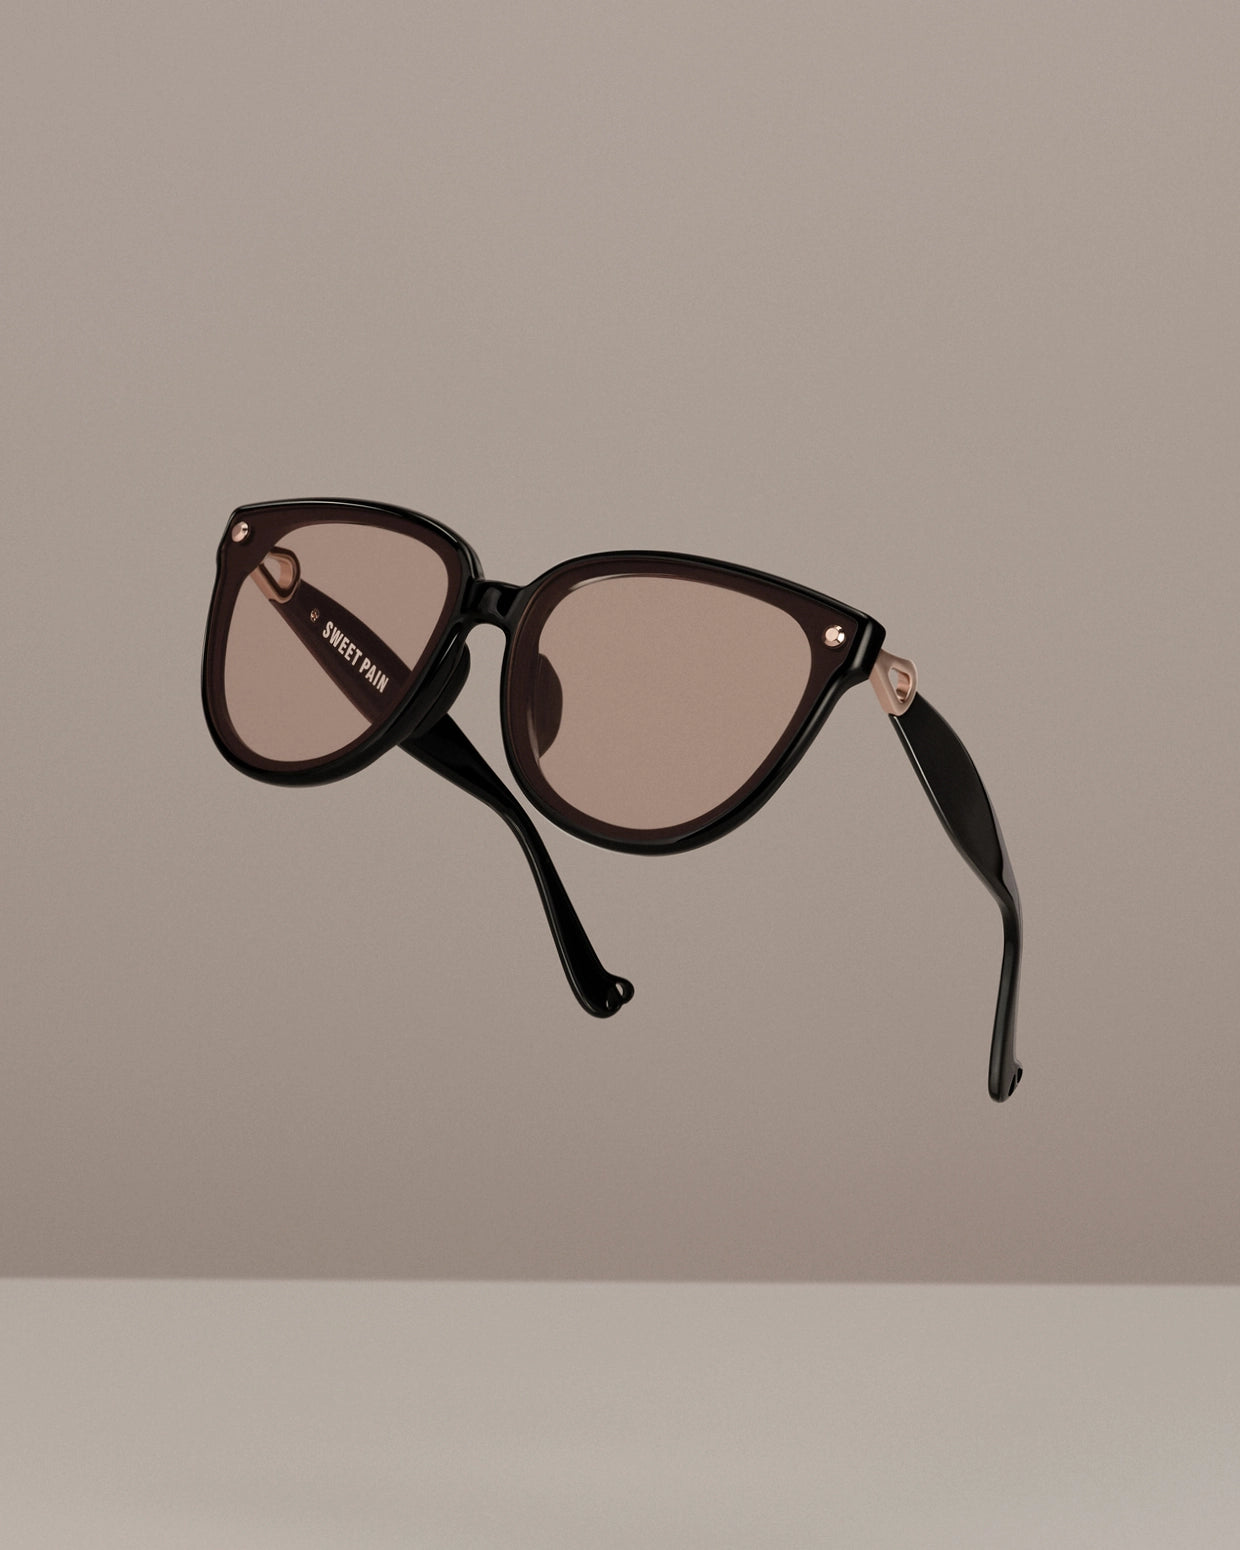 Nana C1 Sunglasses – Subtle Cat-Eye Silhouette